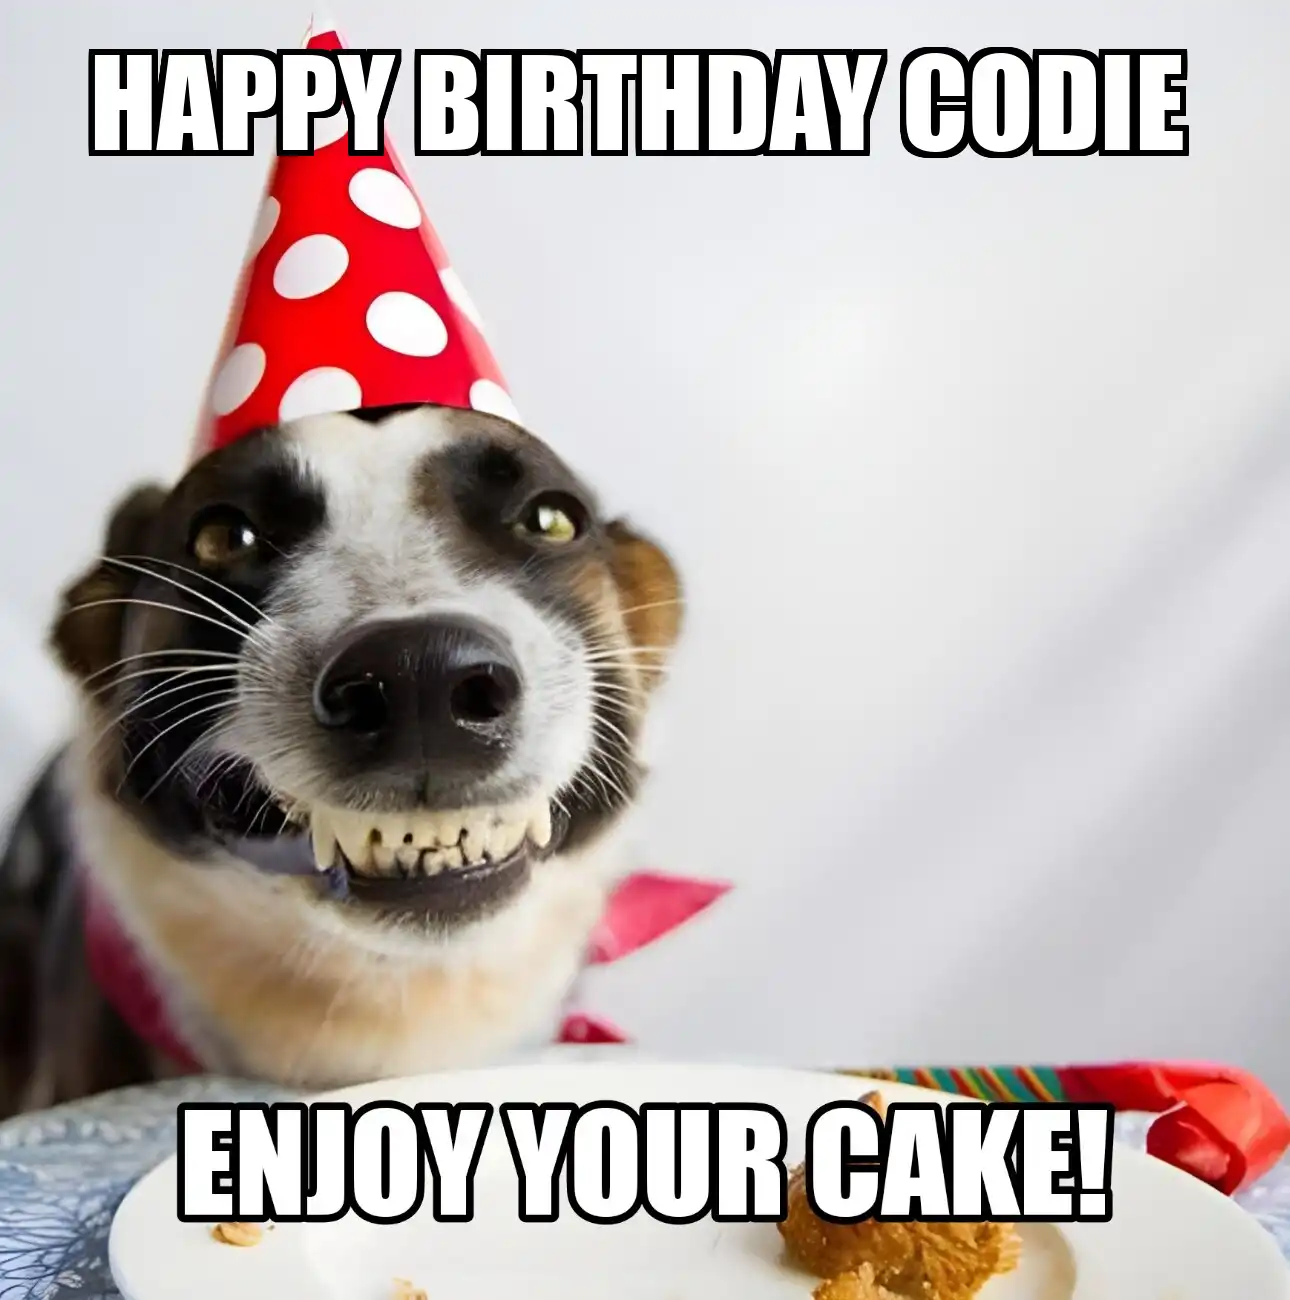 Happy Birthday Codie Enjoy Your Cake Dog Meme